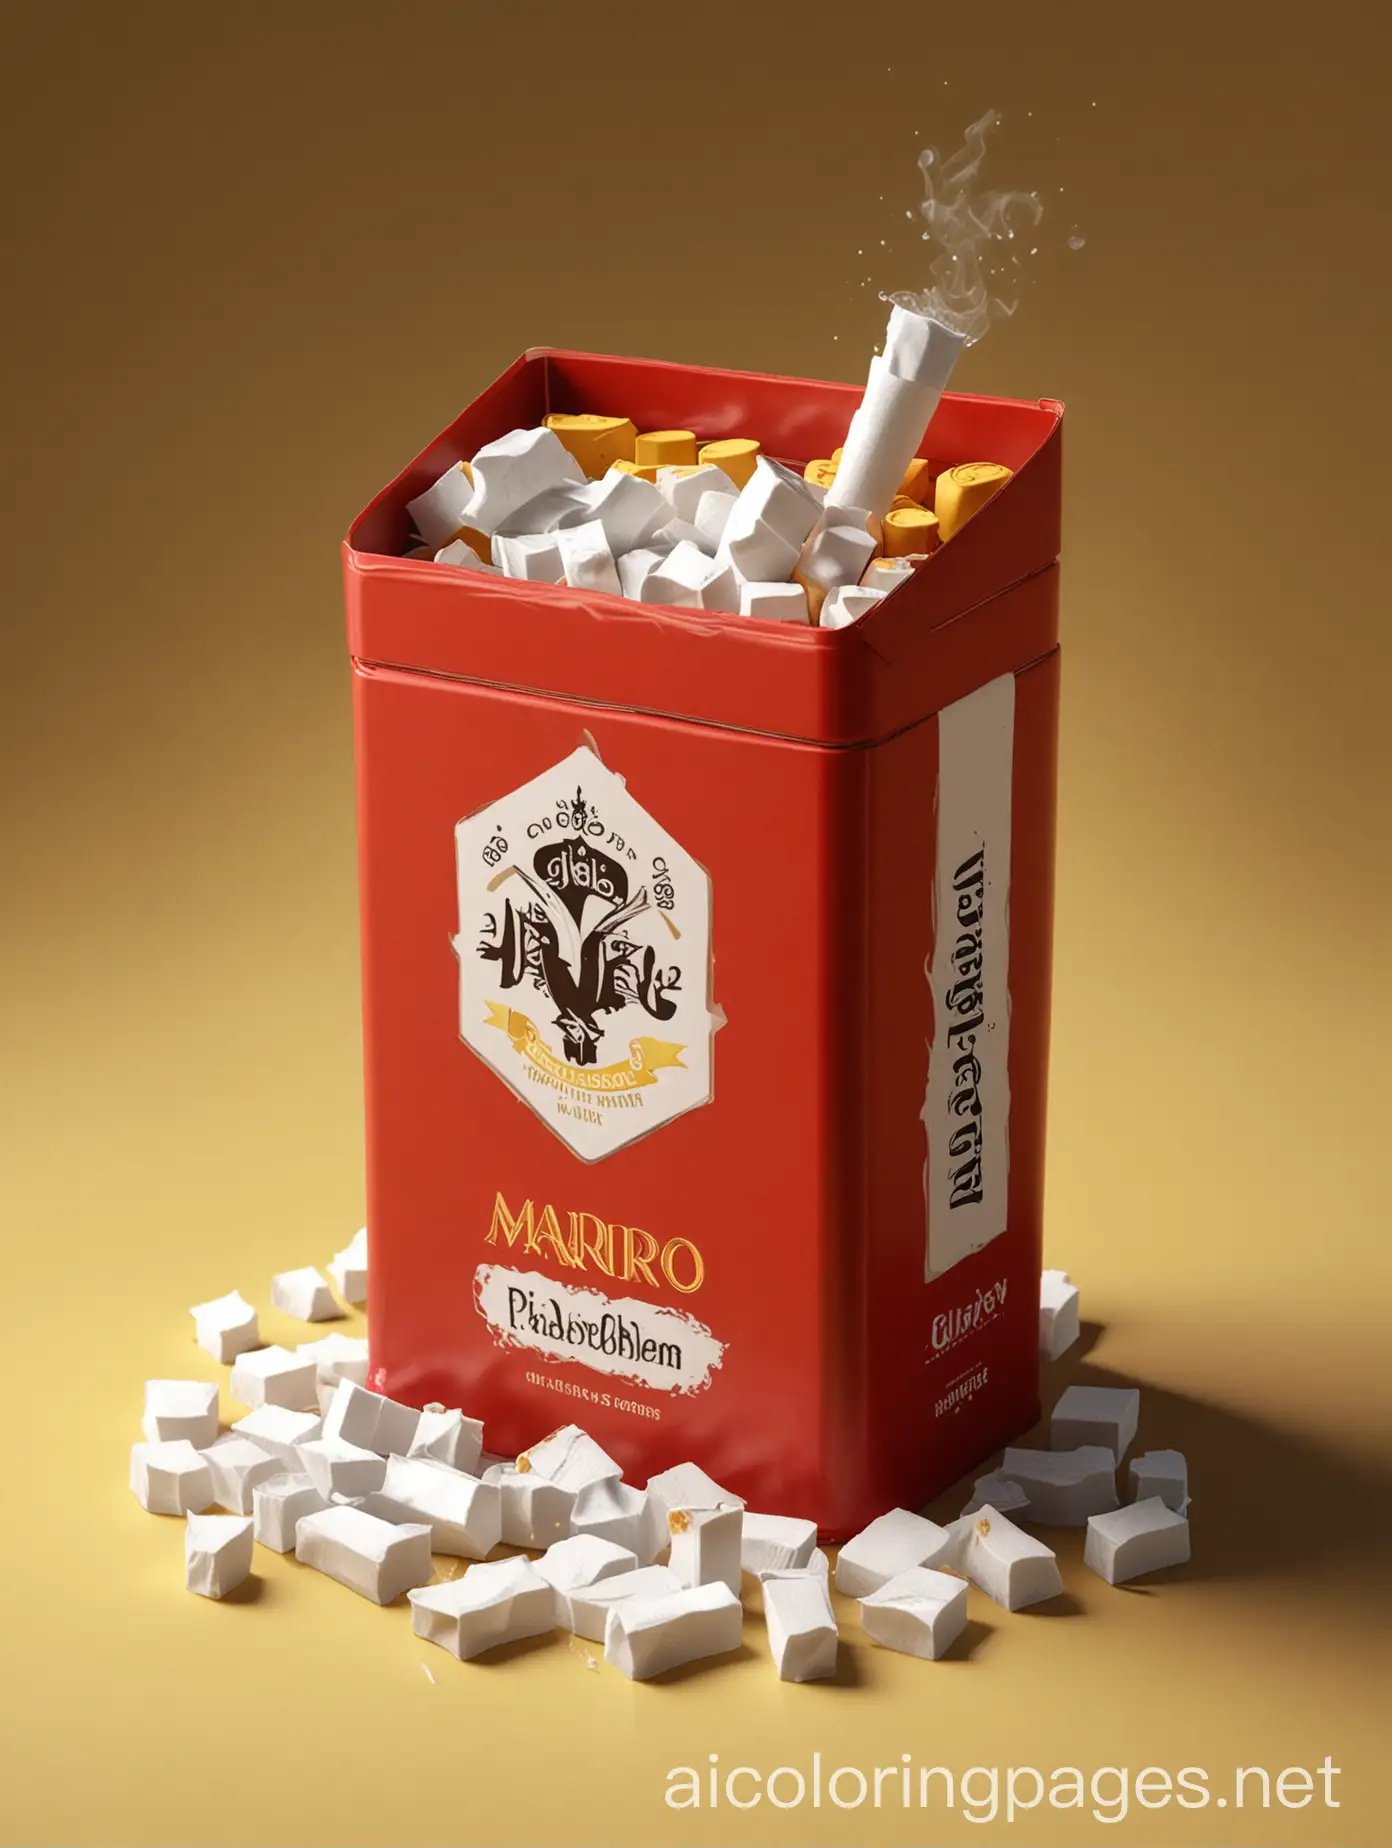 Dark-Red-Marlboro-Cigarette-Box-with-Ice-Circles-on-Cinematic-Yellow-Background